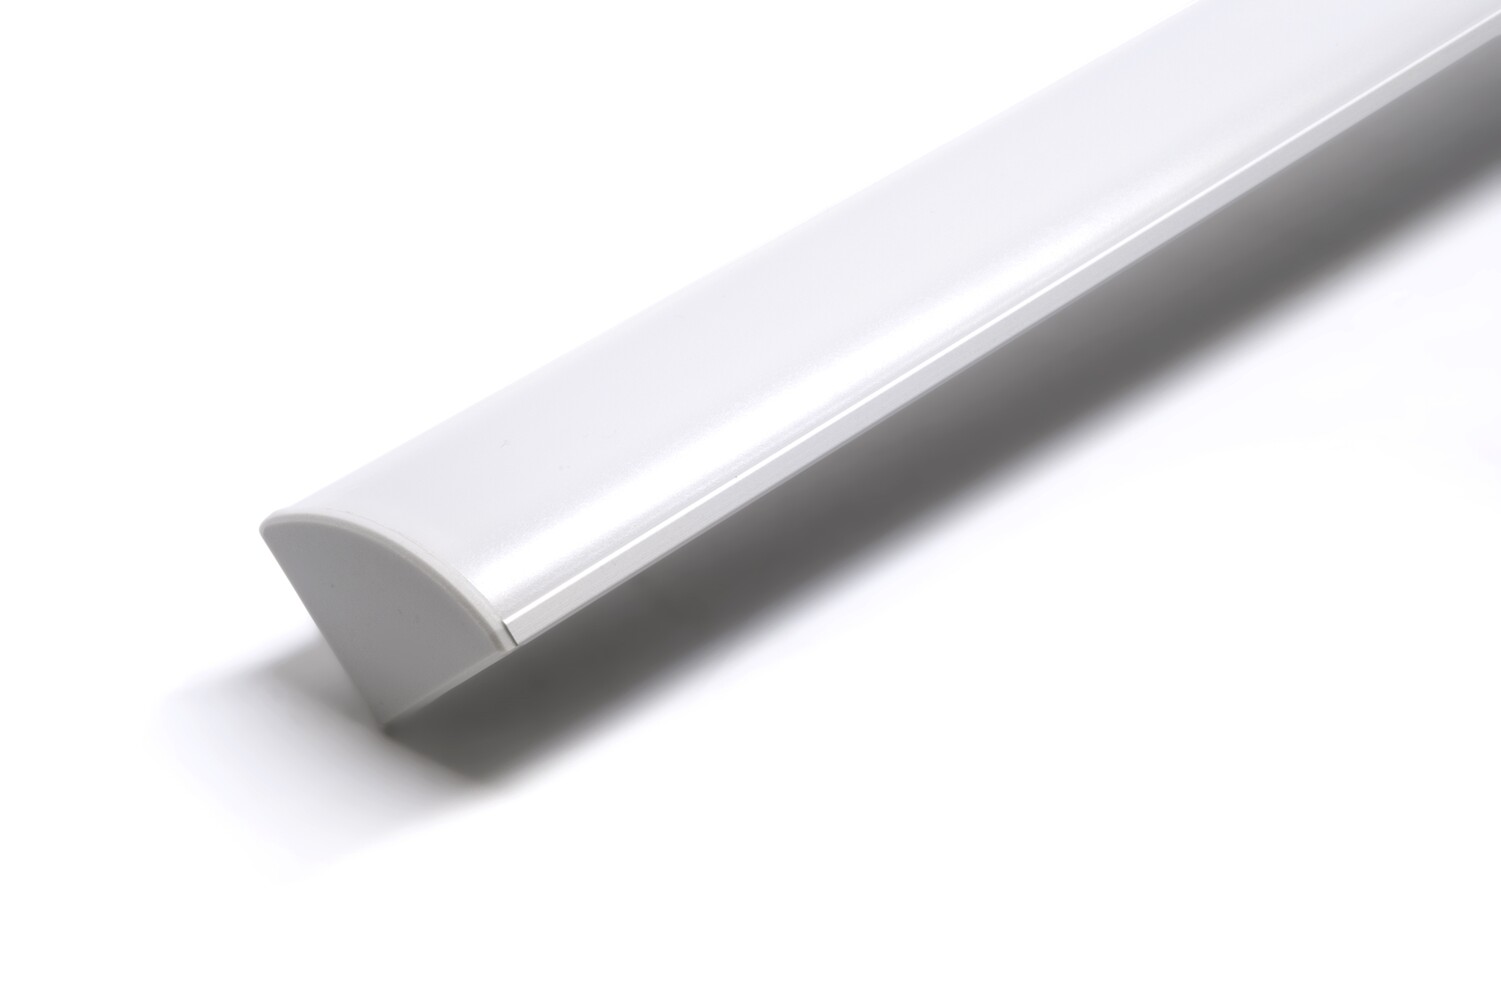 LED Universum - Aluminium Winkel Profil mit 1m Länge und den Maßen 45 x 17mm